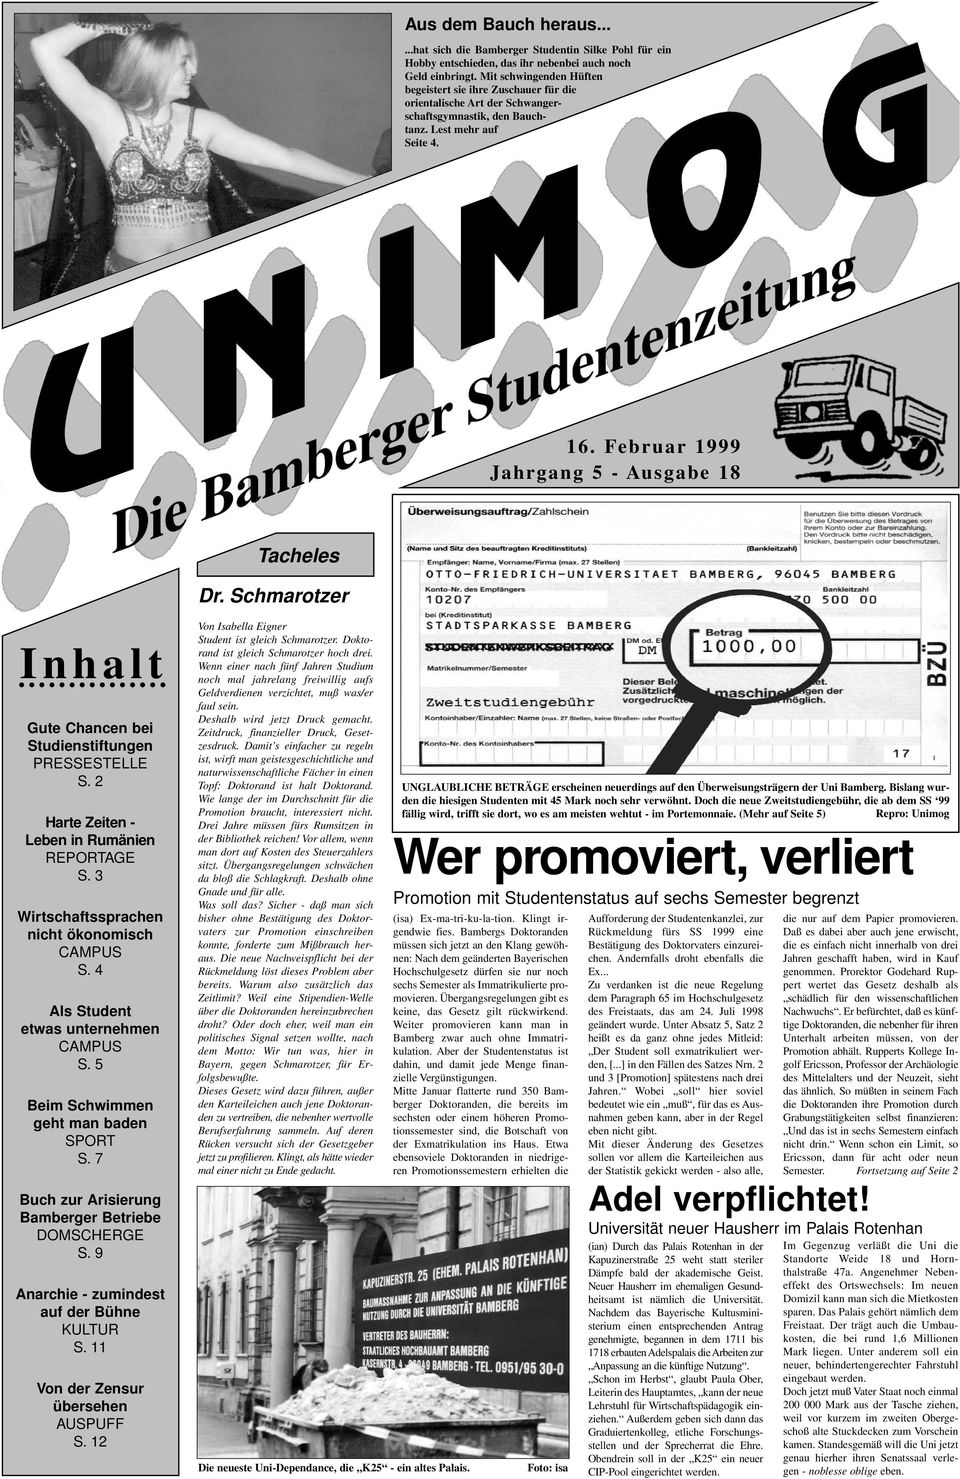 Februar 1999 Jahrgang 5 Ausgabe 18 Tacheles Dr Schmarotzer Inhalt Gute Chancen bei Stu nstiftungen